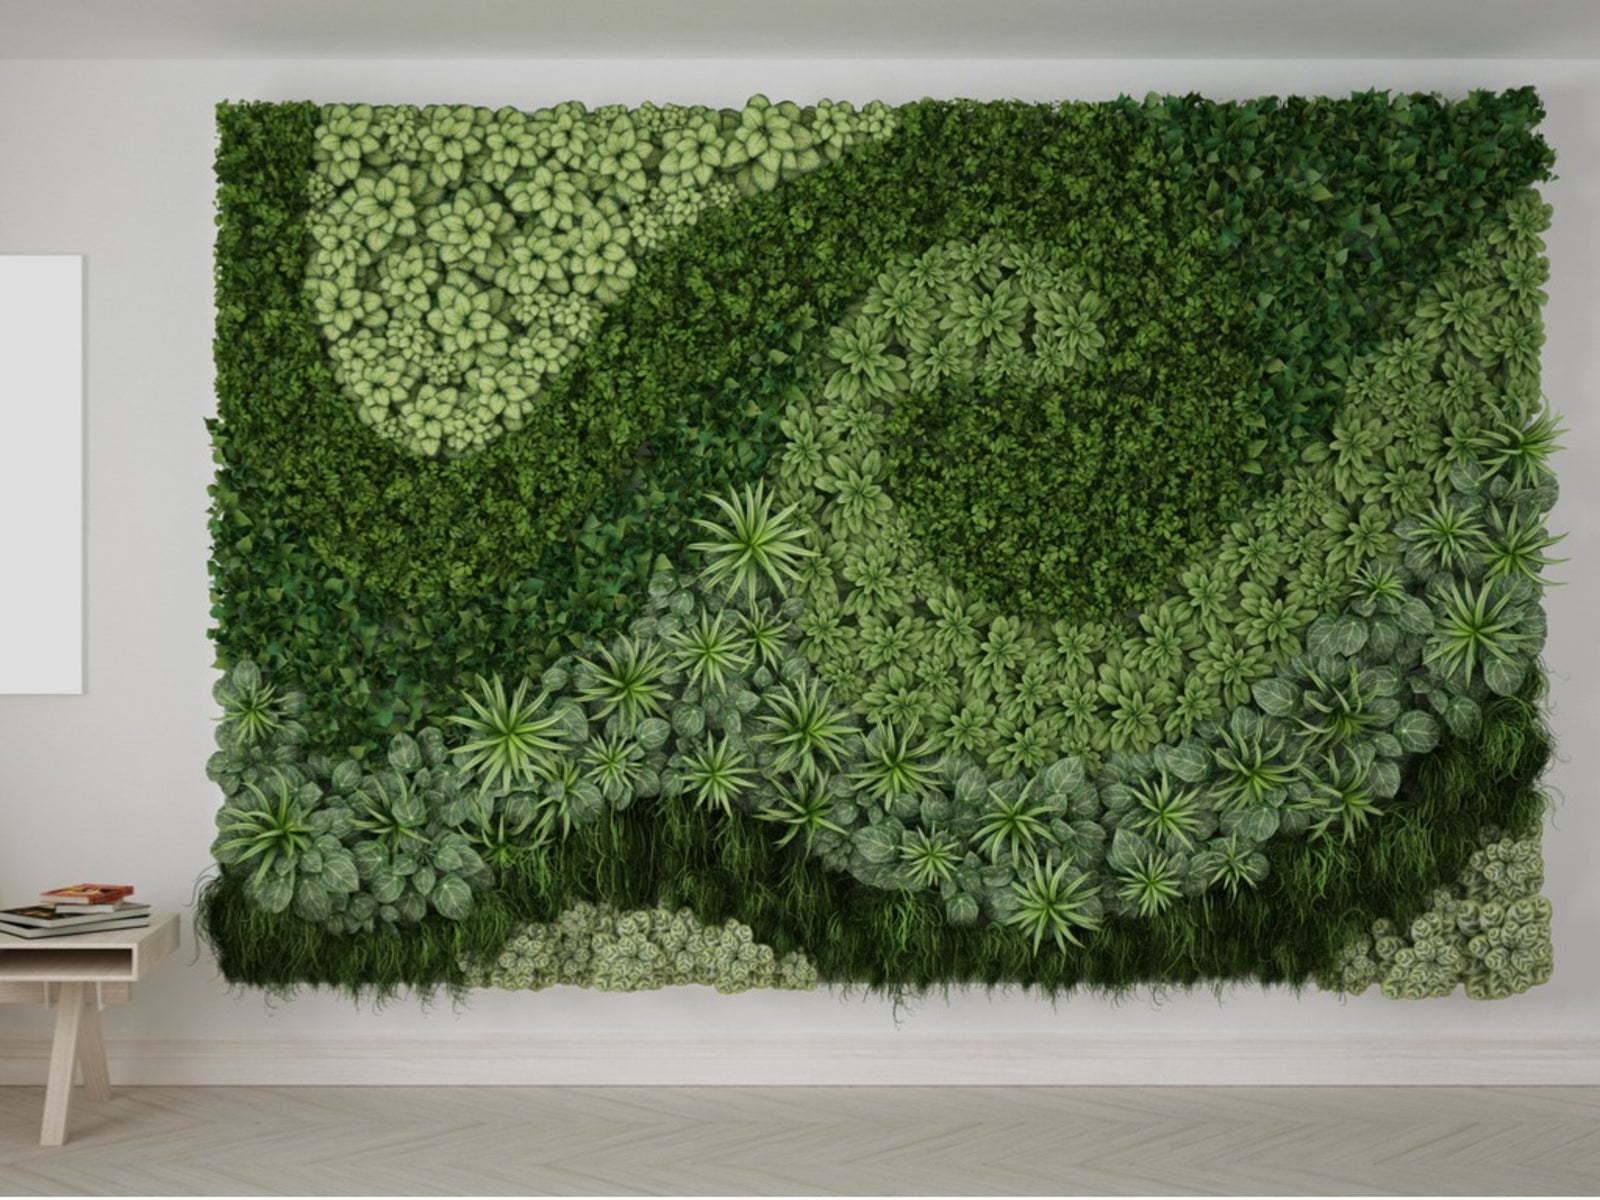 Plants on walls indoors